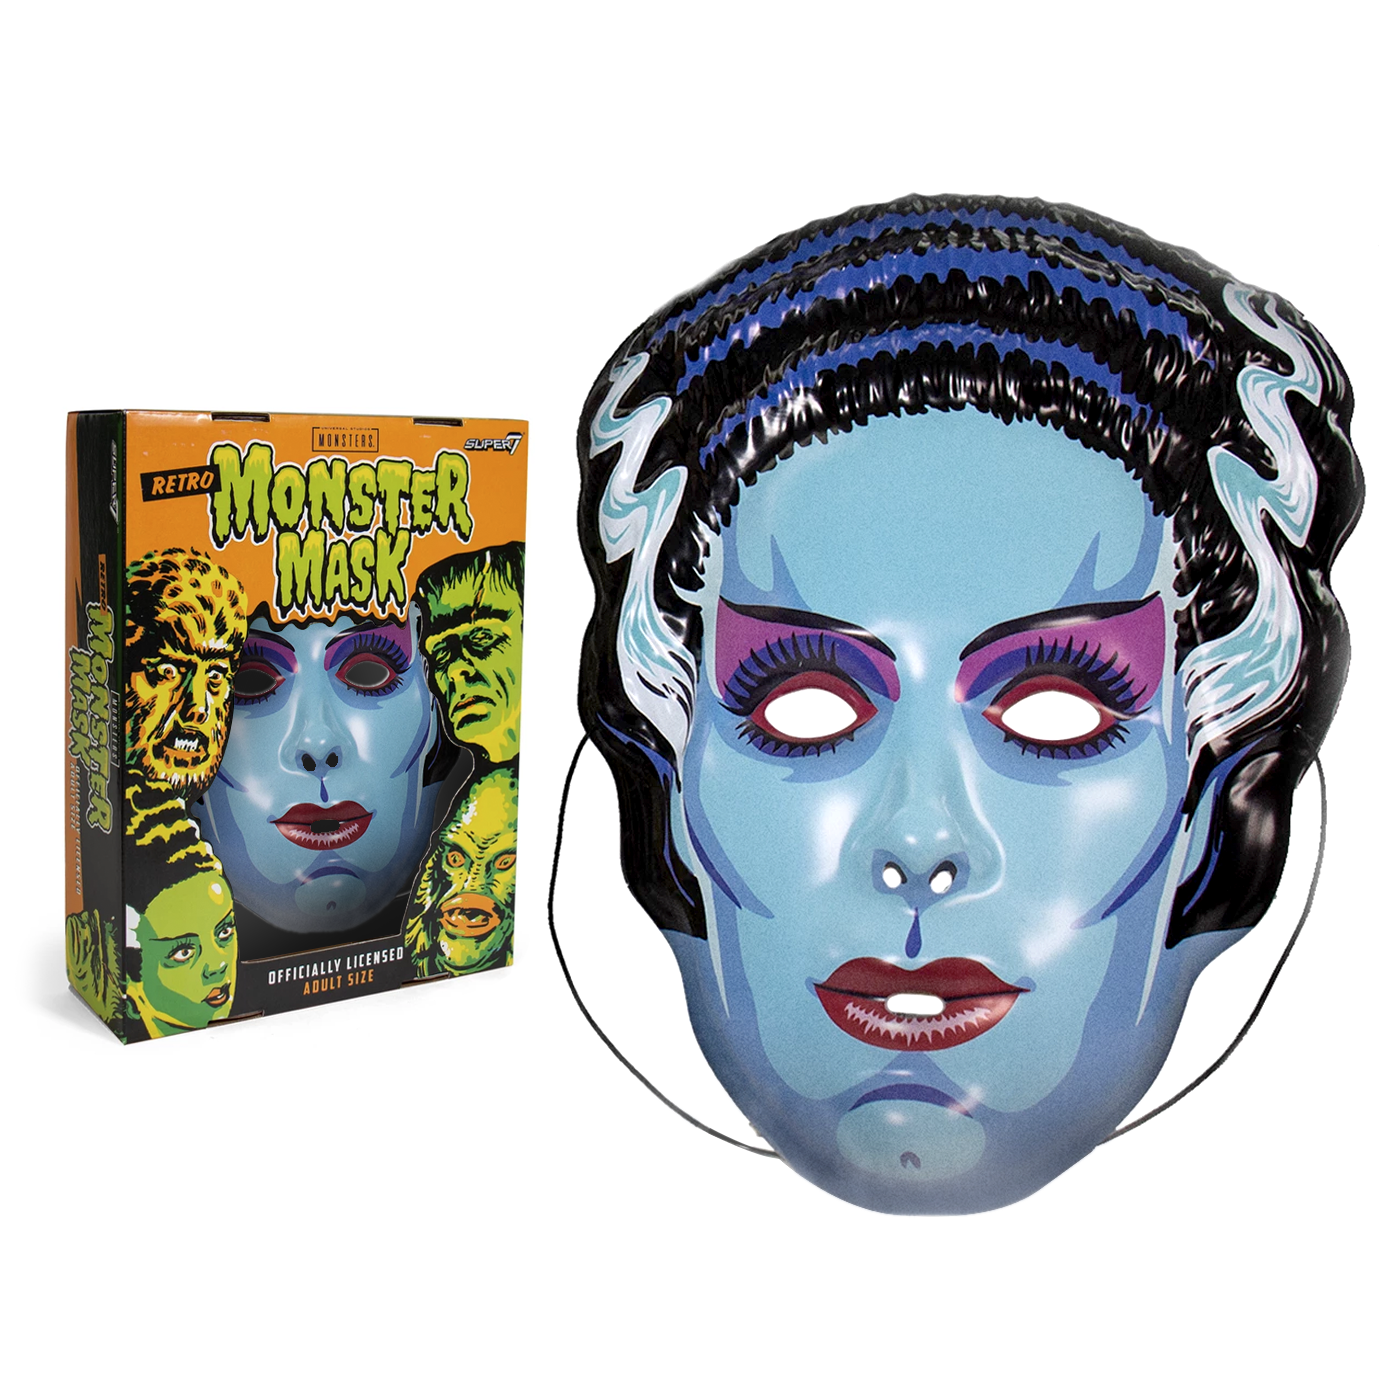 Universal Monsters Mask - Bride of Frankenstein (Blue)